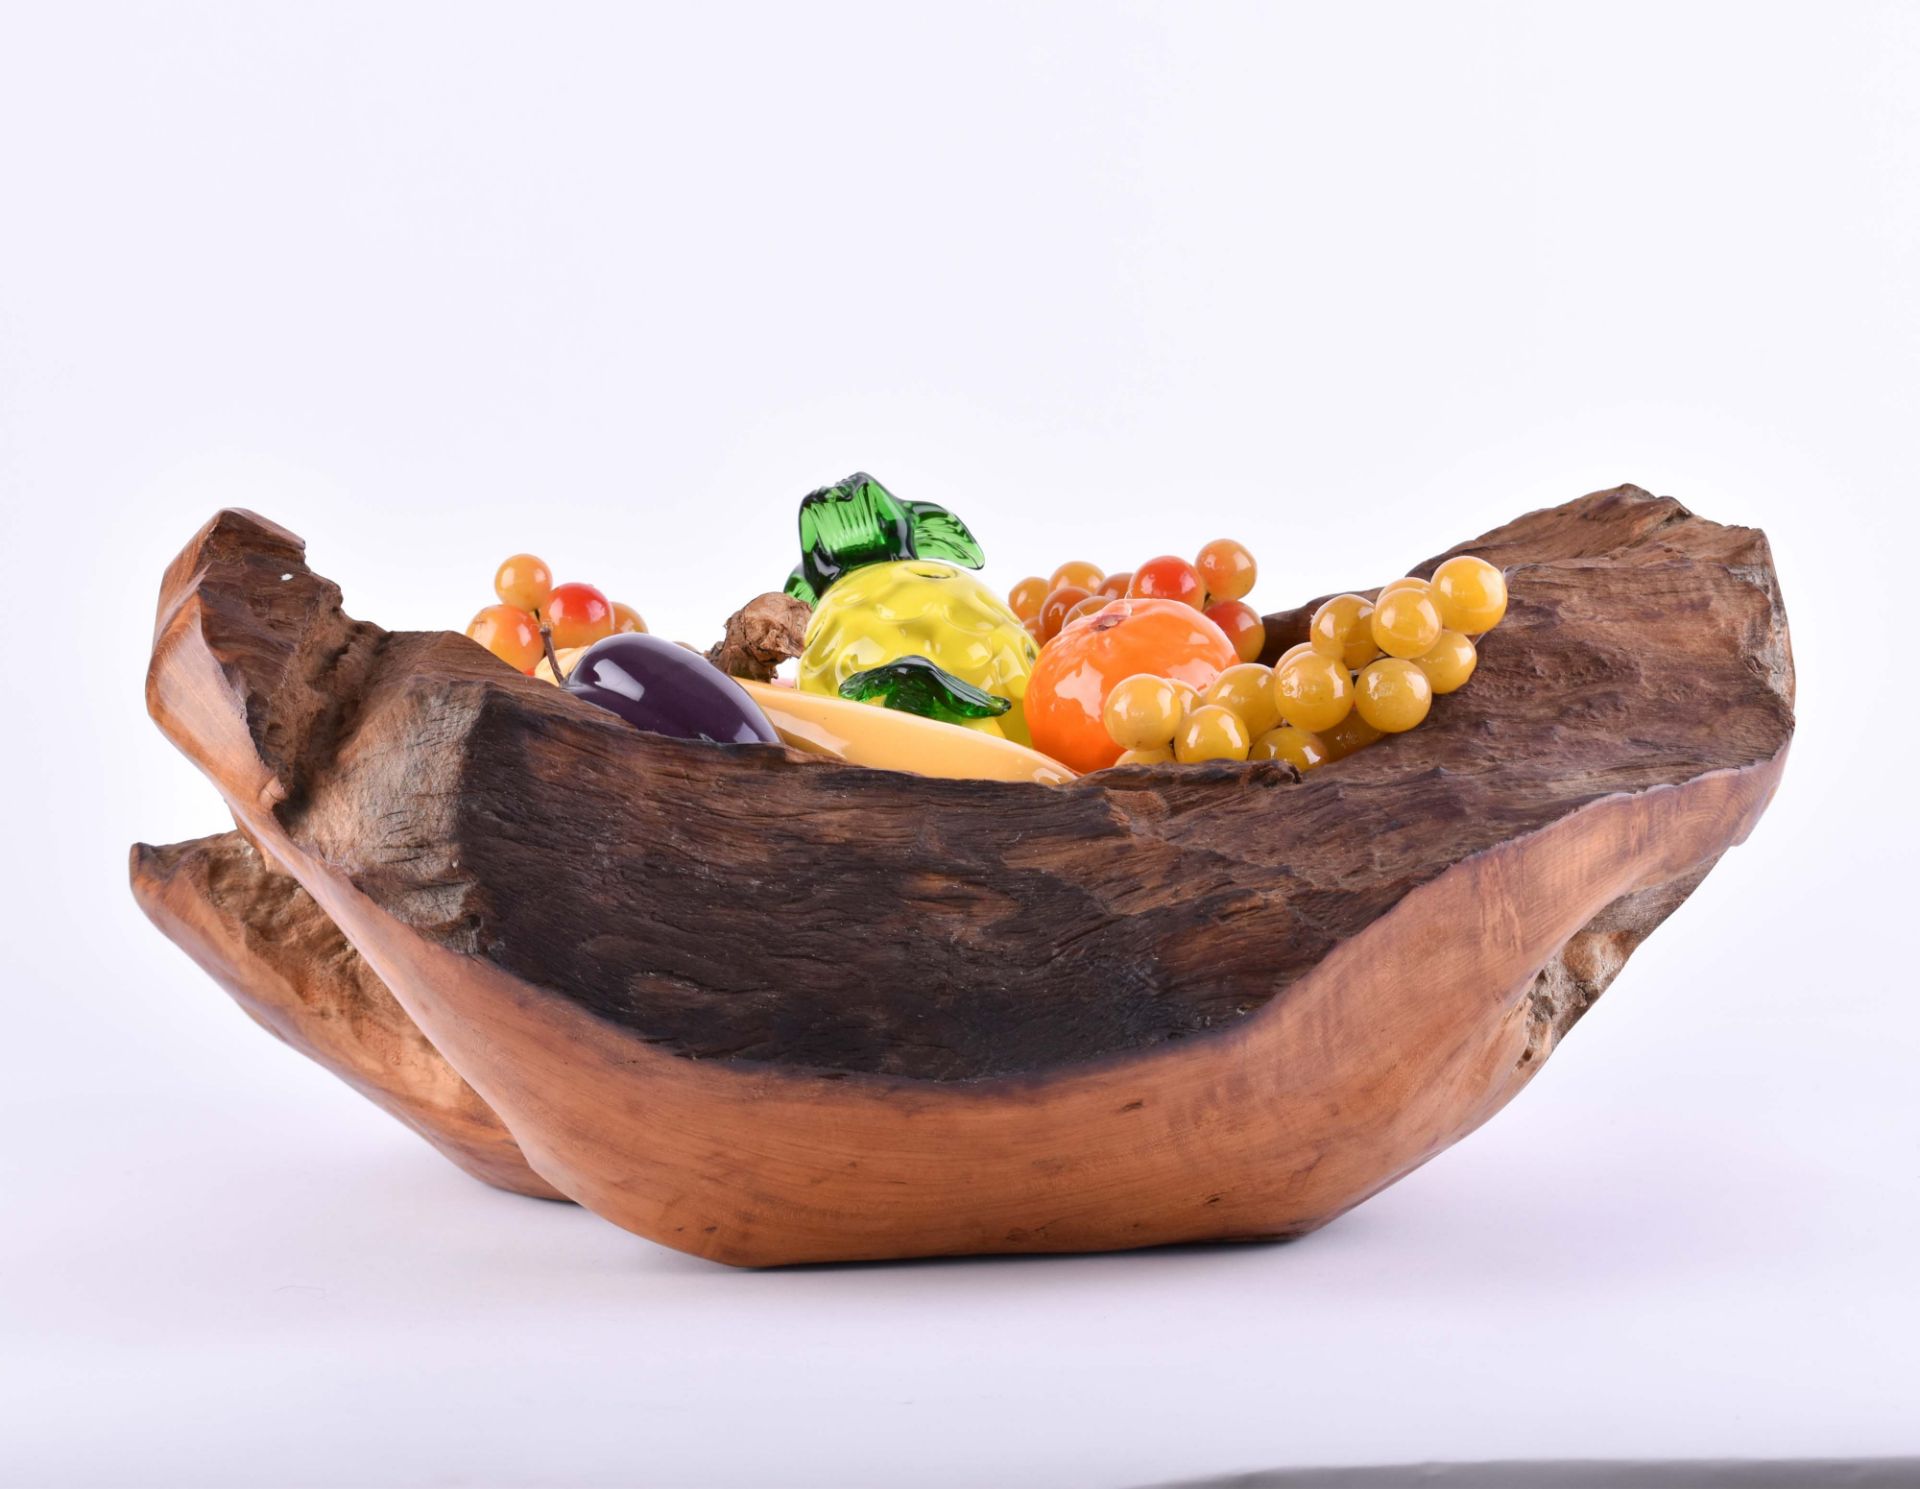  Fruit and vegetable basket - Image 3 of 5